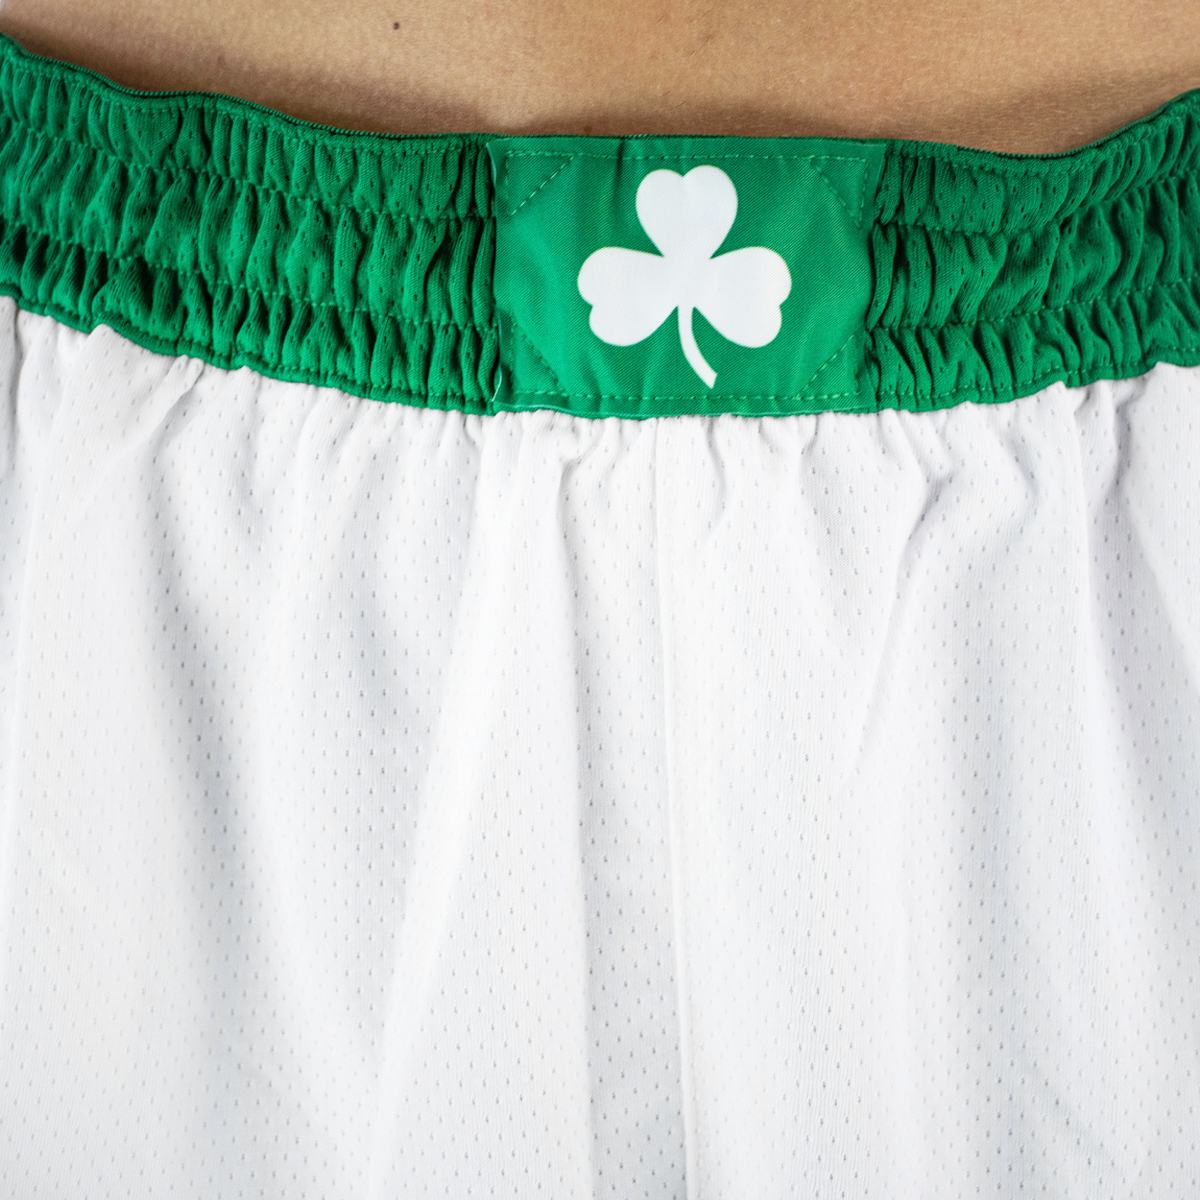 Nike Performance BOSTON CELTICS NBA SWINGMAN SHORT - Pantalón corto de  deporte - clover/white/verde 